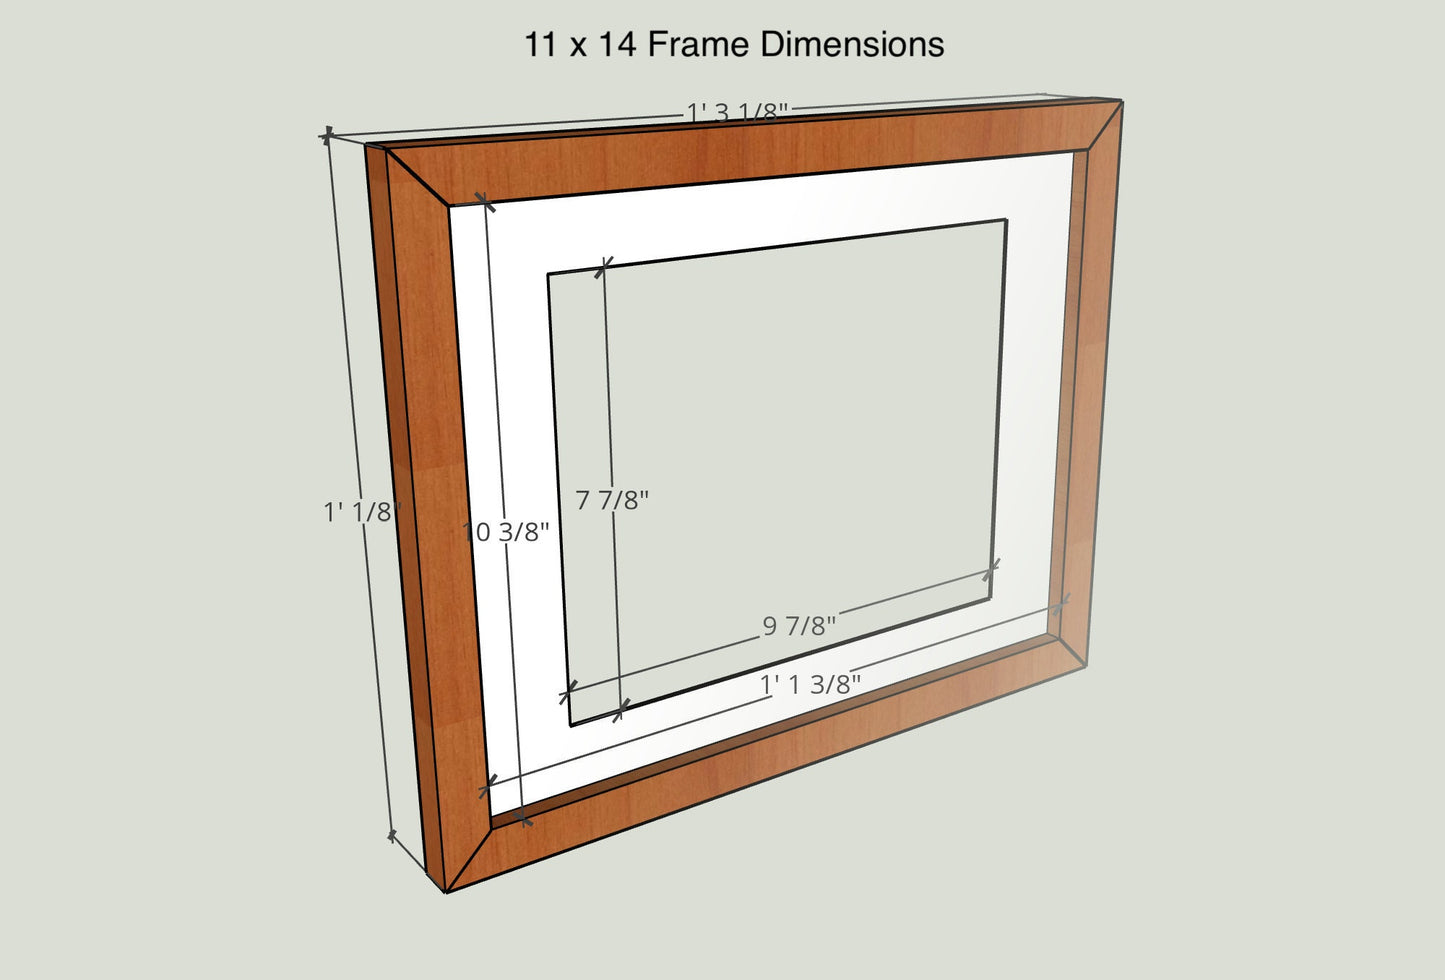 Hickory Hardwood Gallery Frame - Minimalist Profile - Picture Frame | Natural Wood Frame